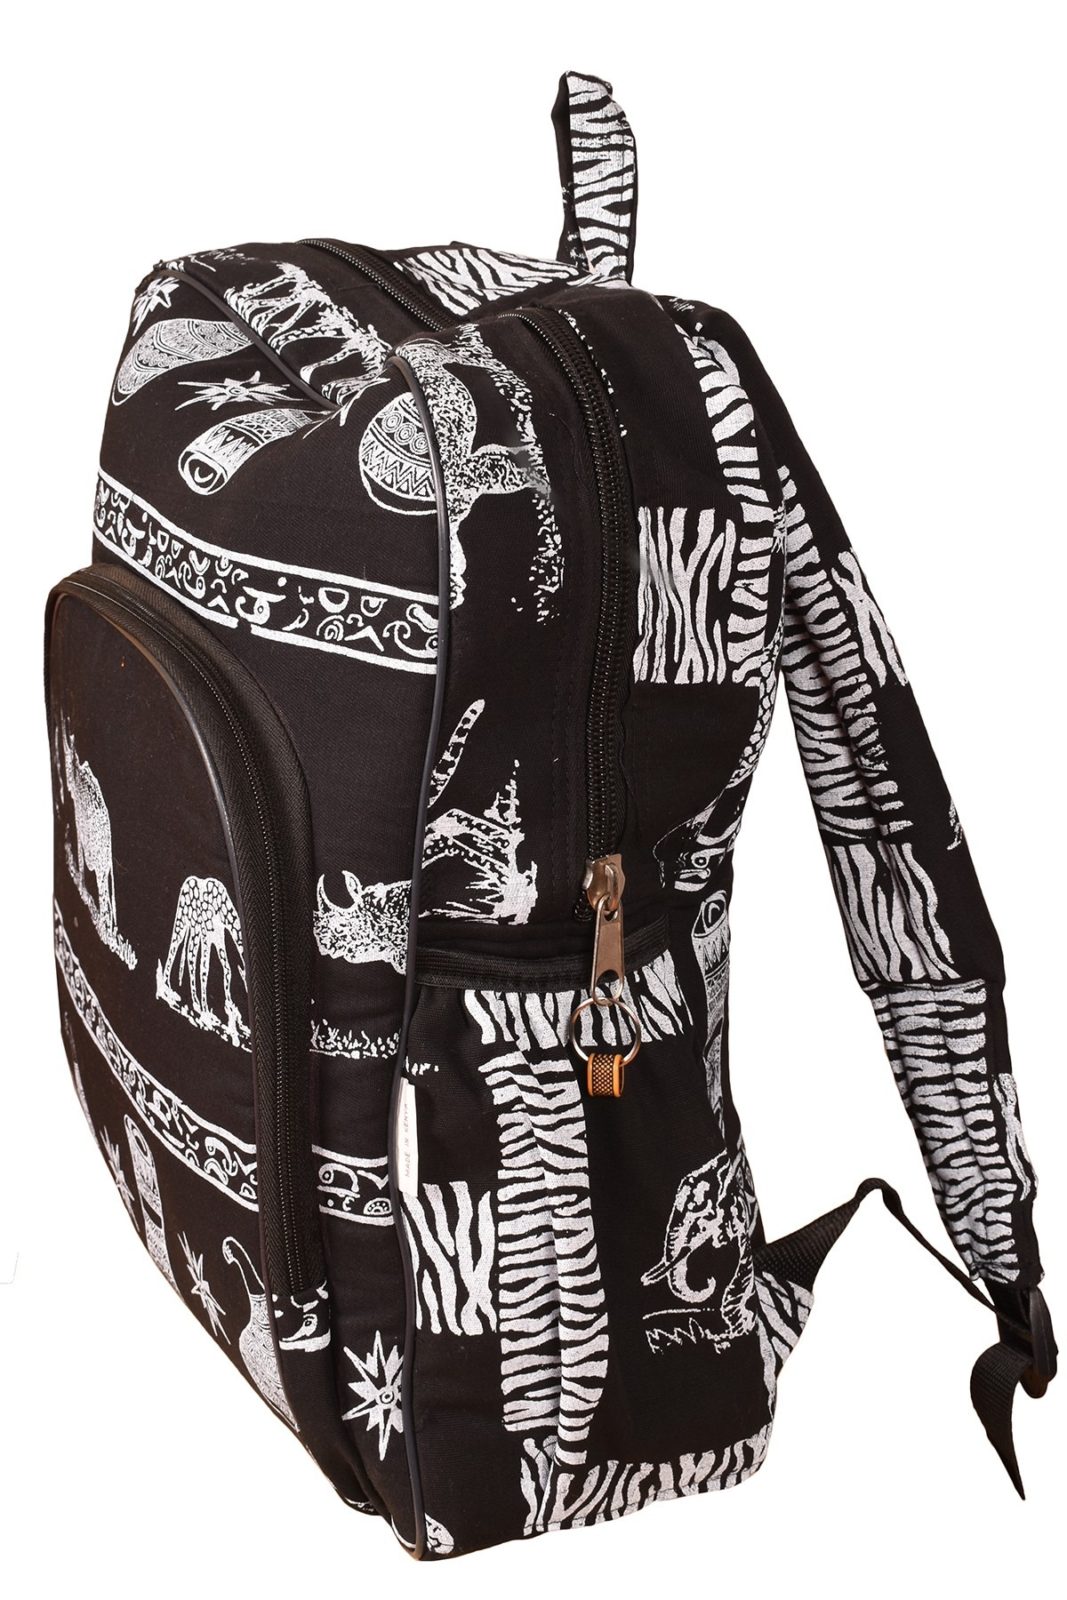 Zebra stripes Backpack Proveded by African Bravo Creative ltd